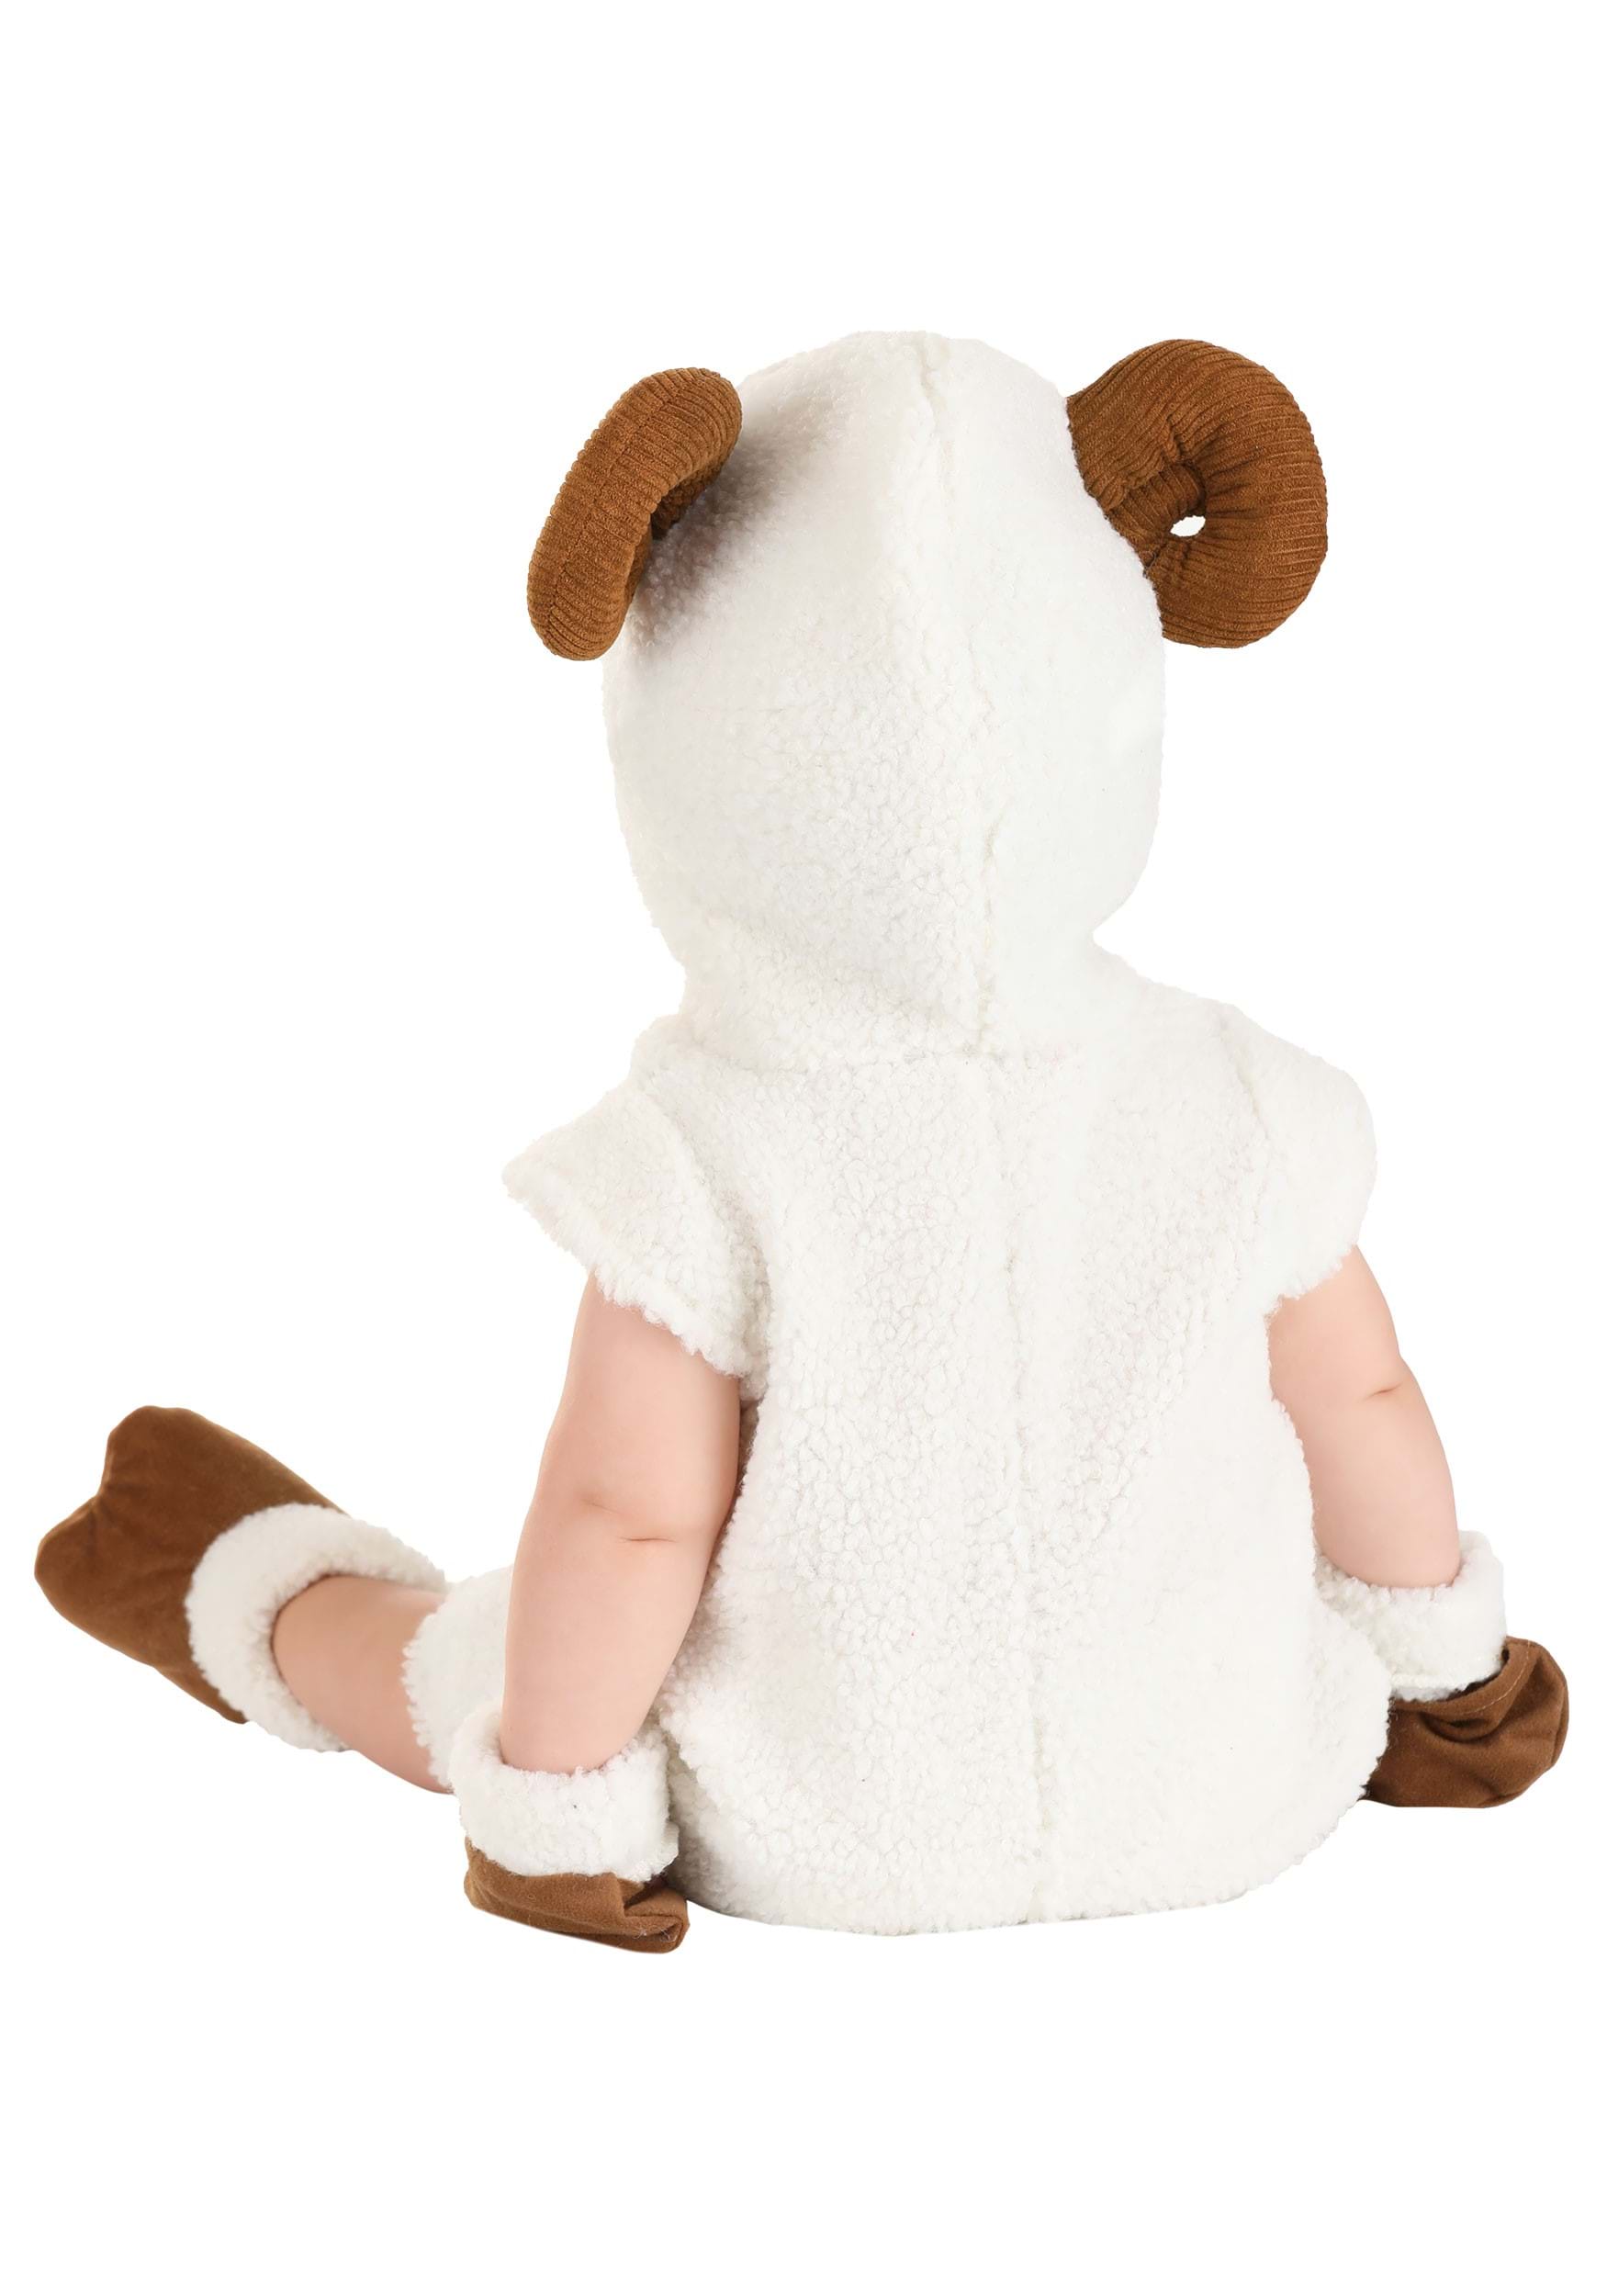 Baby Ram Infant Costume